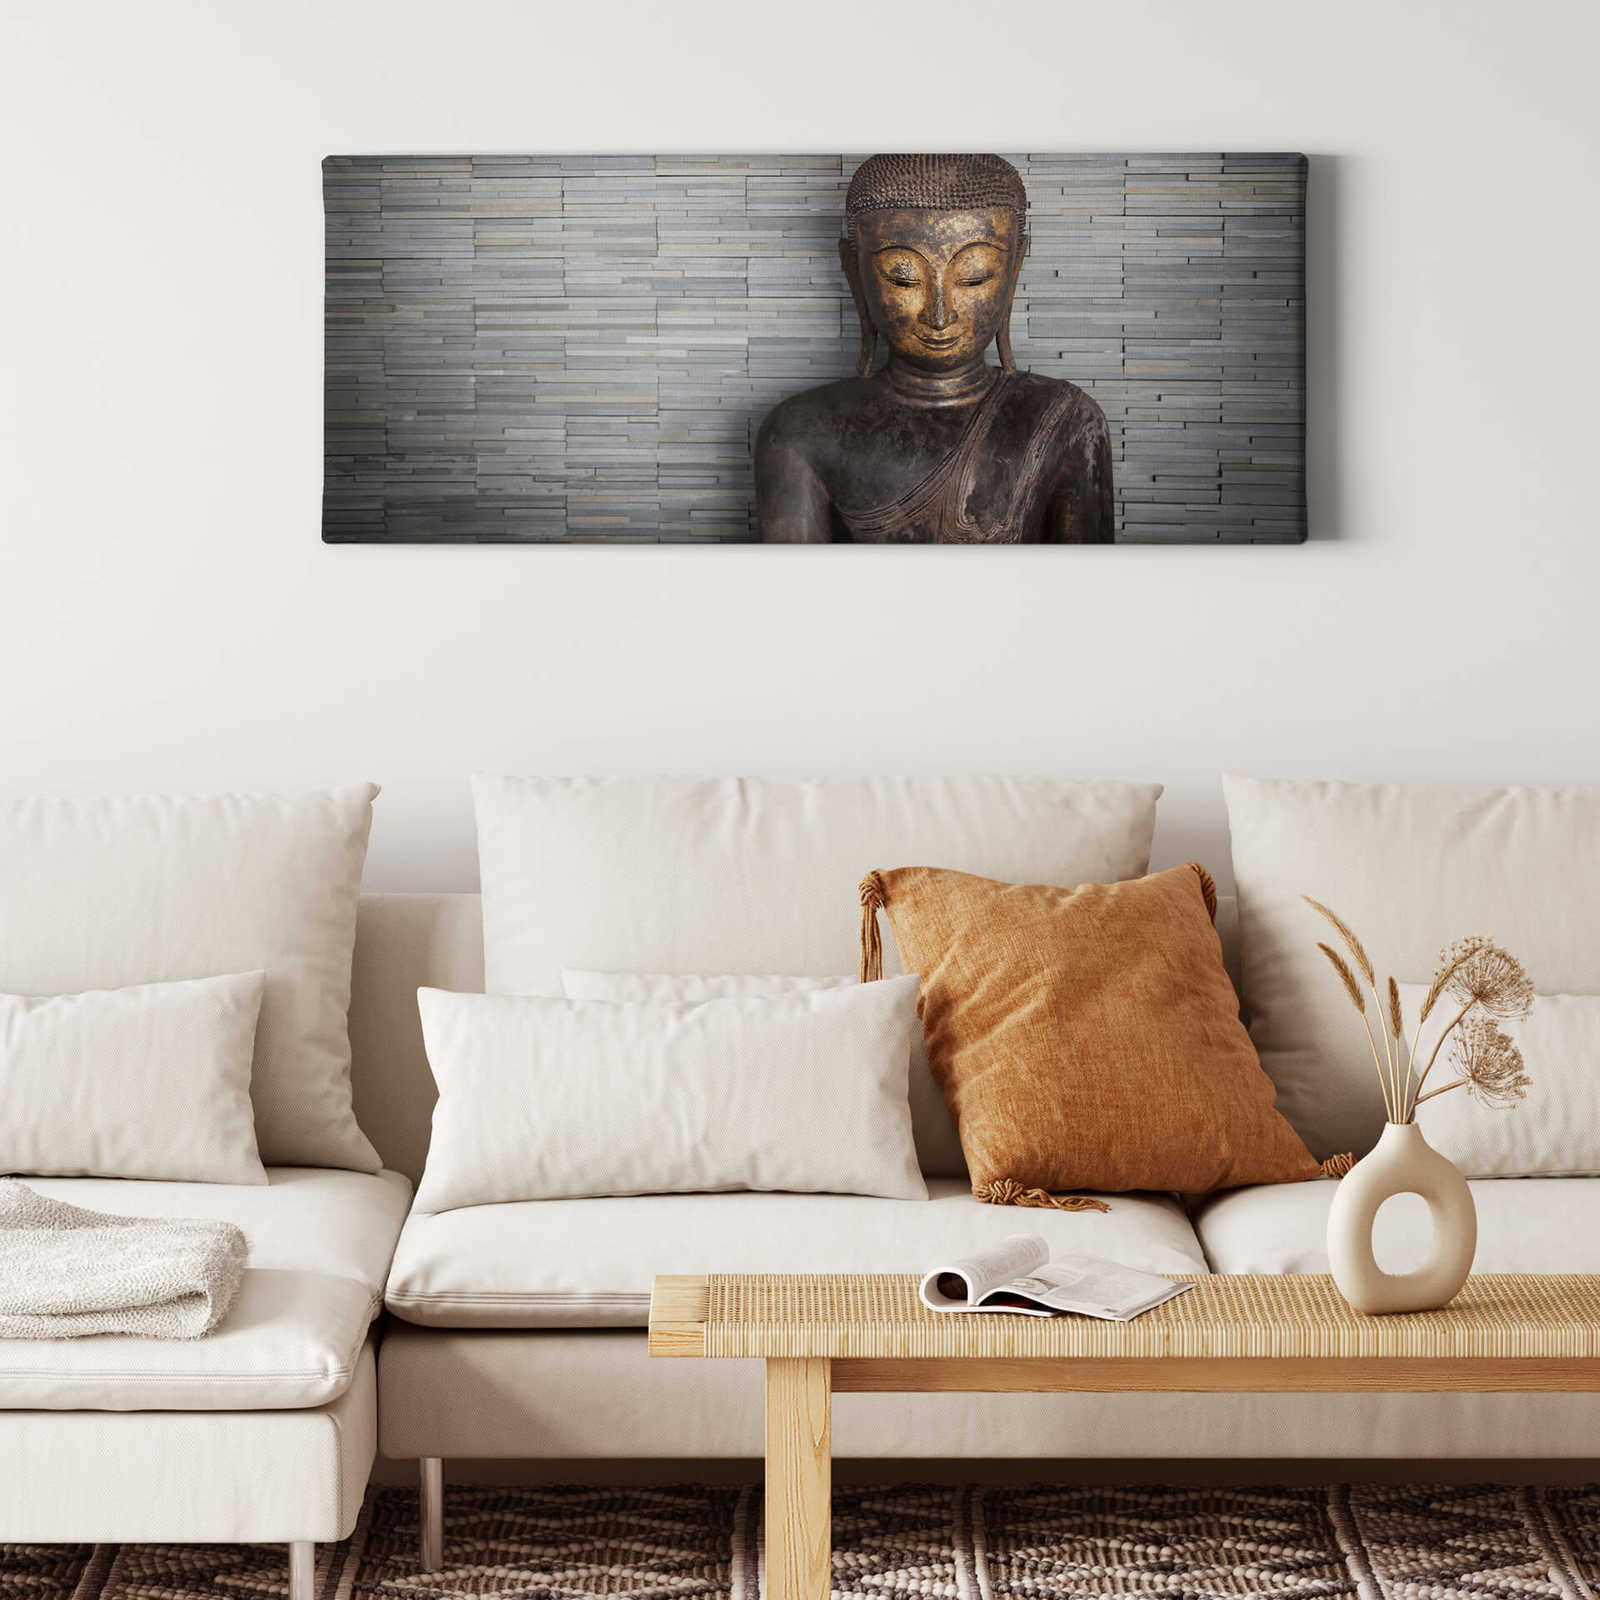             Canvas print Buddha figure, meditation and spirituality
        